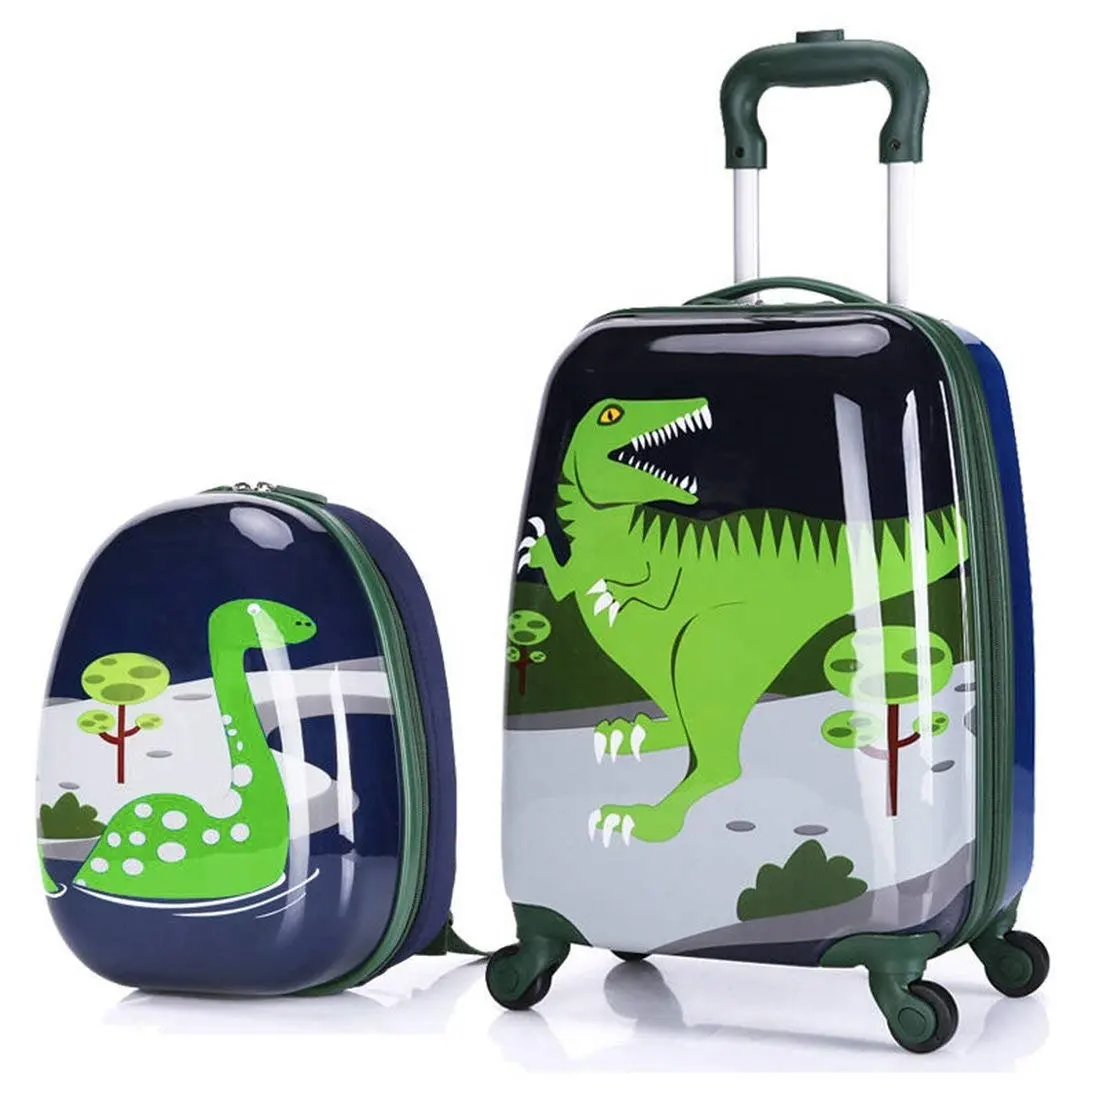 car set WCK Cartoon Kids Carry on Luggage Set Upright Rolling Wheels Travel Suitcase for Boys 